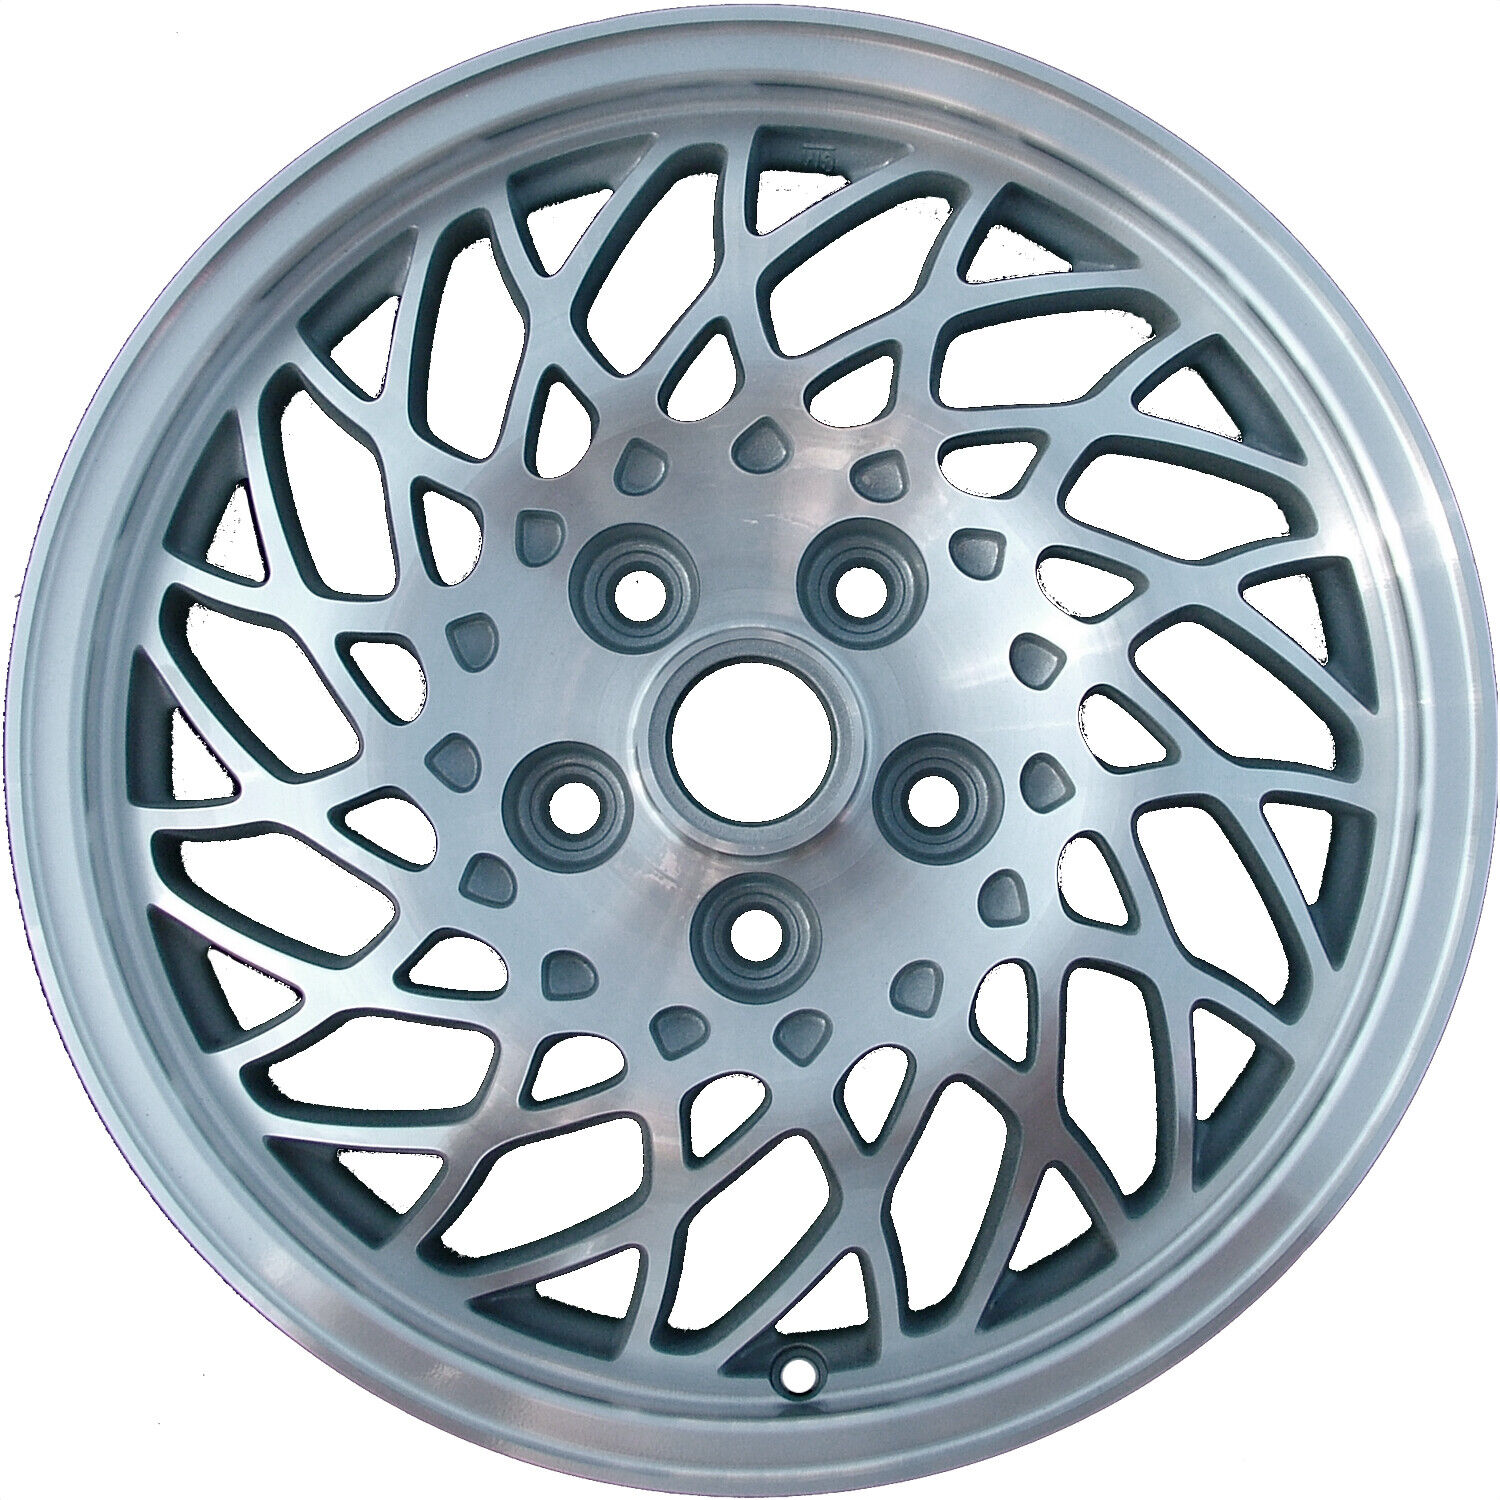 06527 Reconditioned OEM Aluminum Wheel 16x6.5 fits 1997-2000 Pontiac Grand Prix